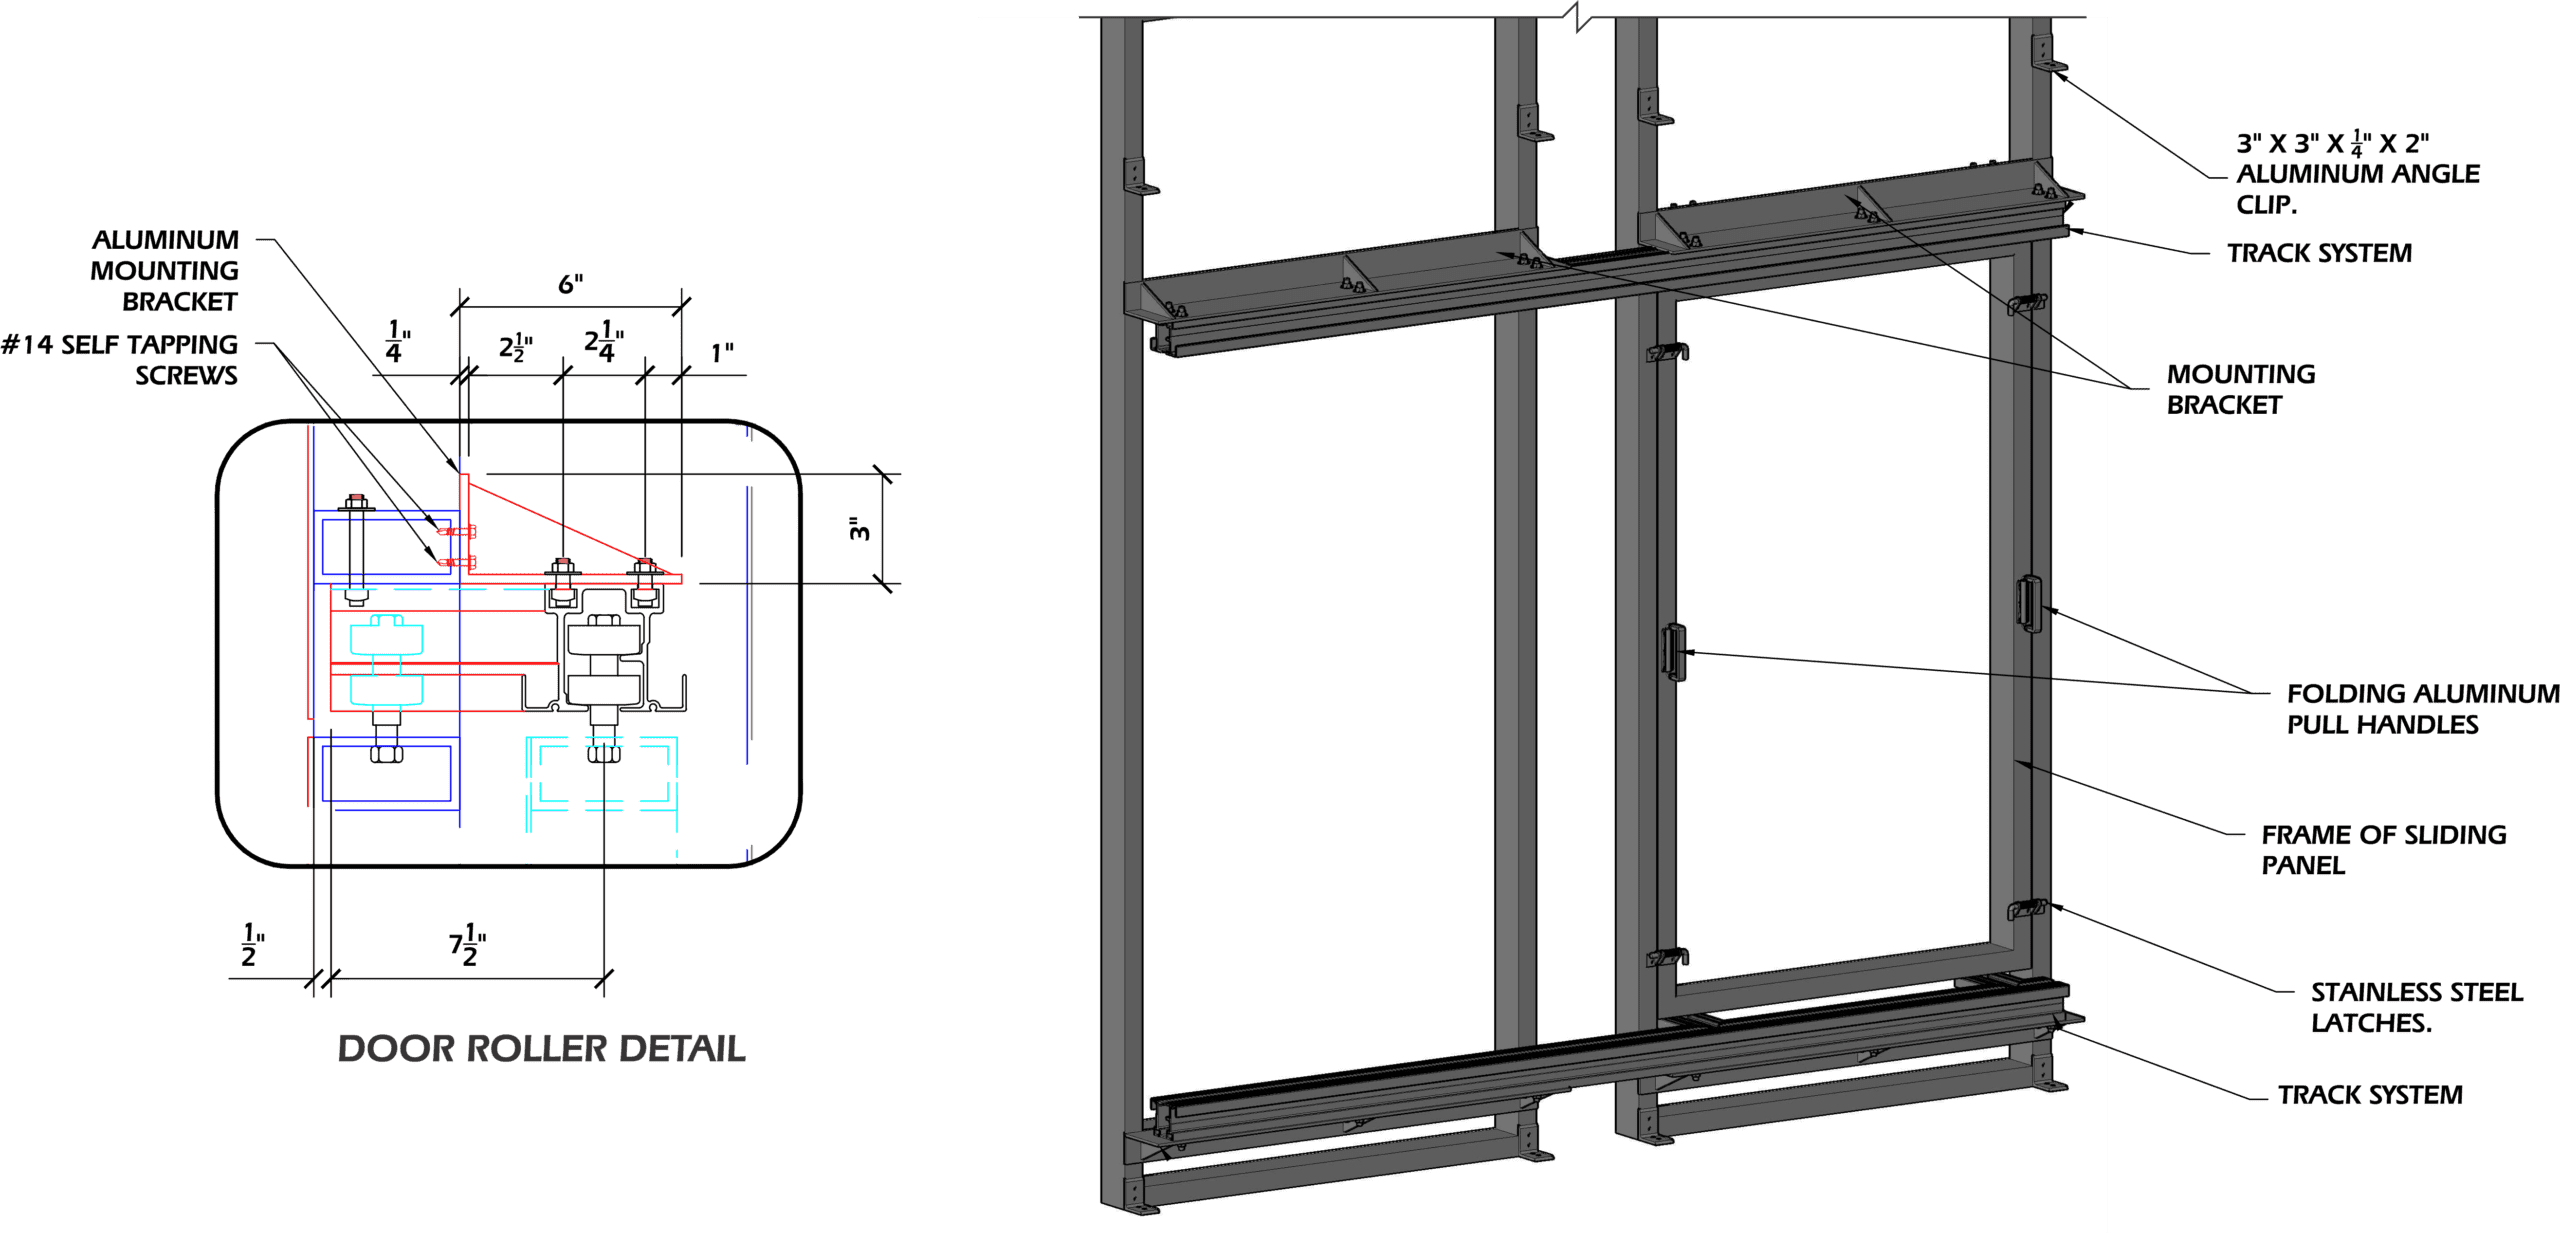 Mechanical Drawing of Window Washer Access Door Through Roof Façade